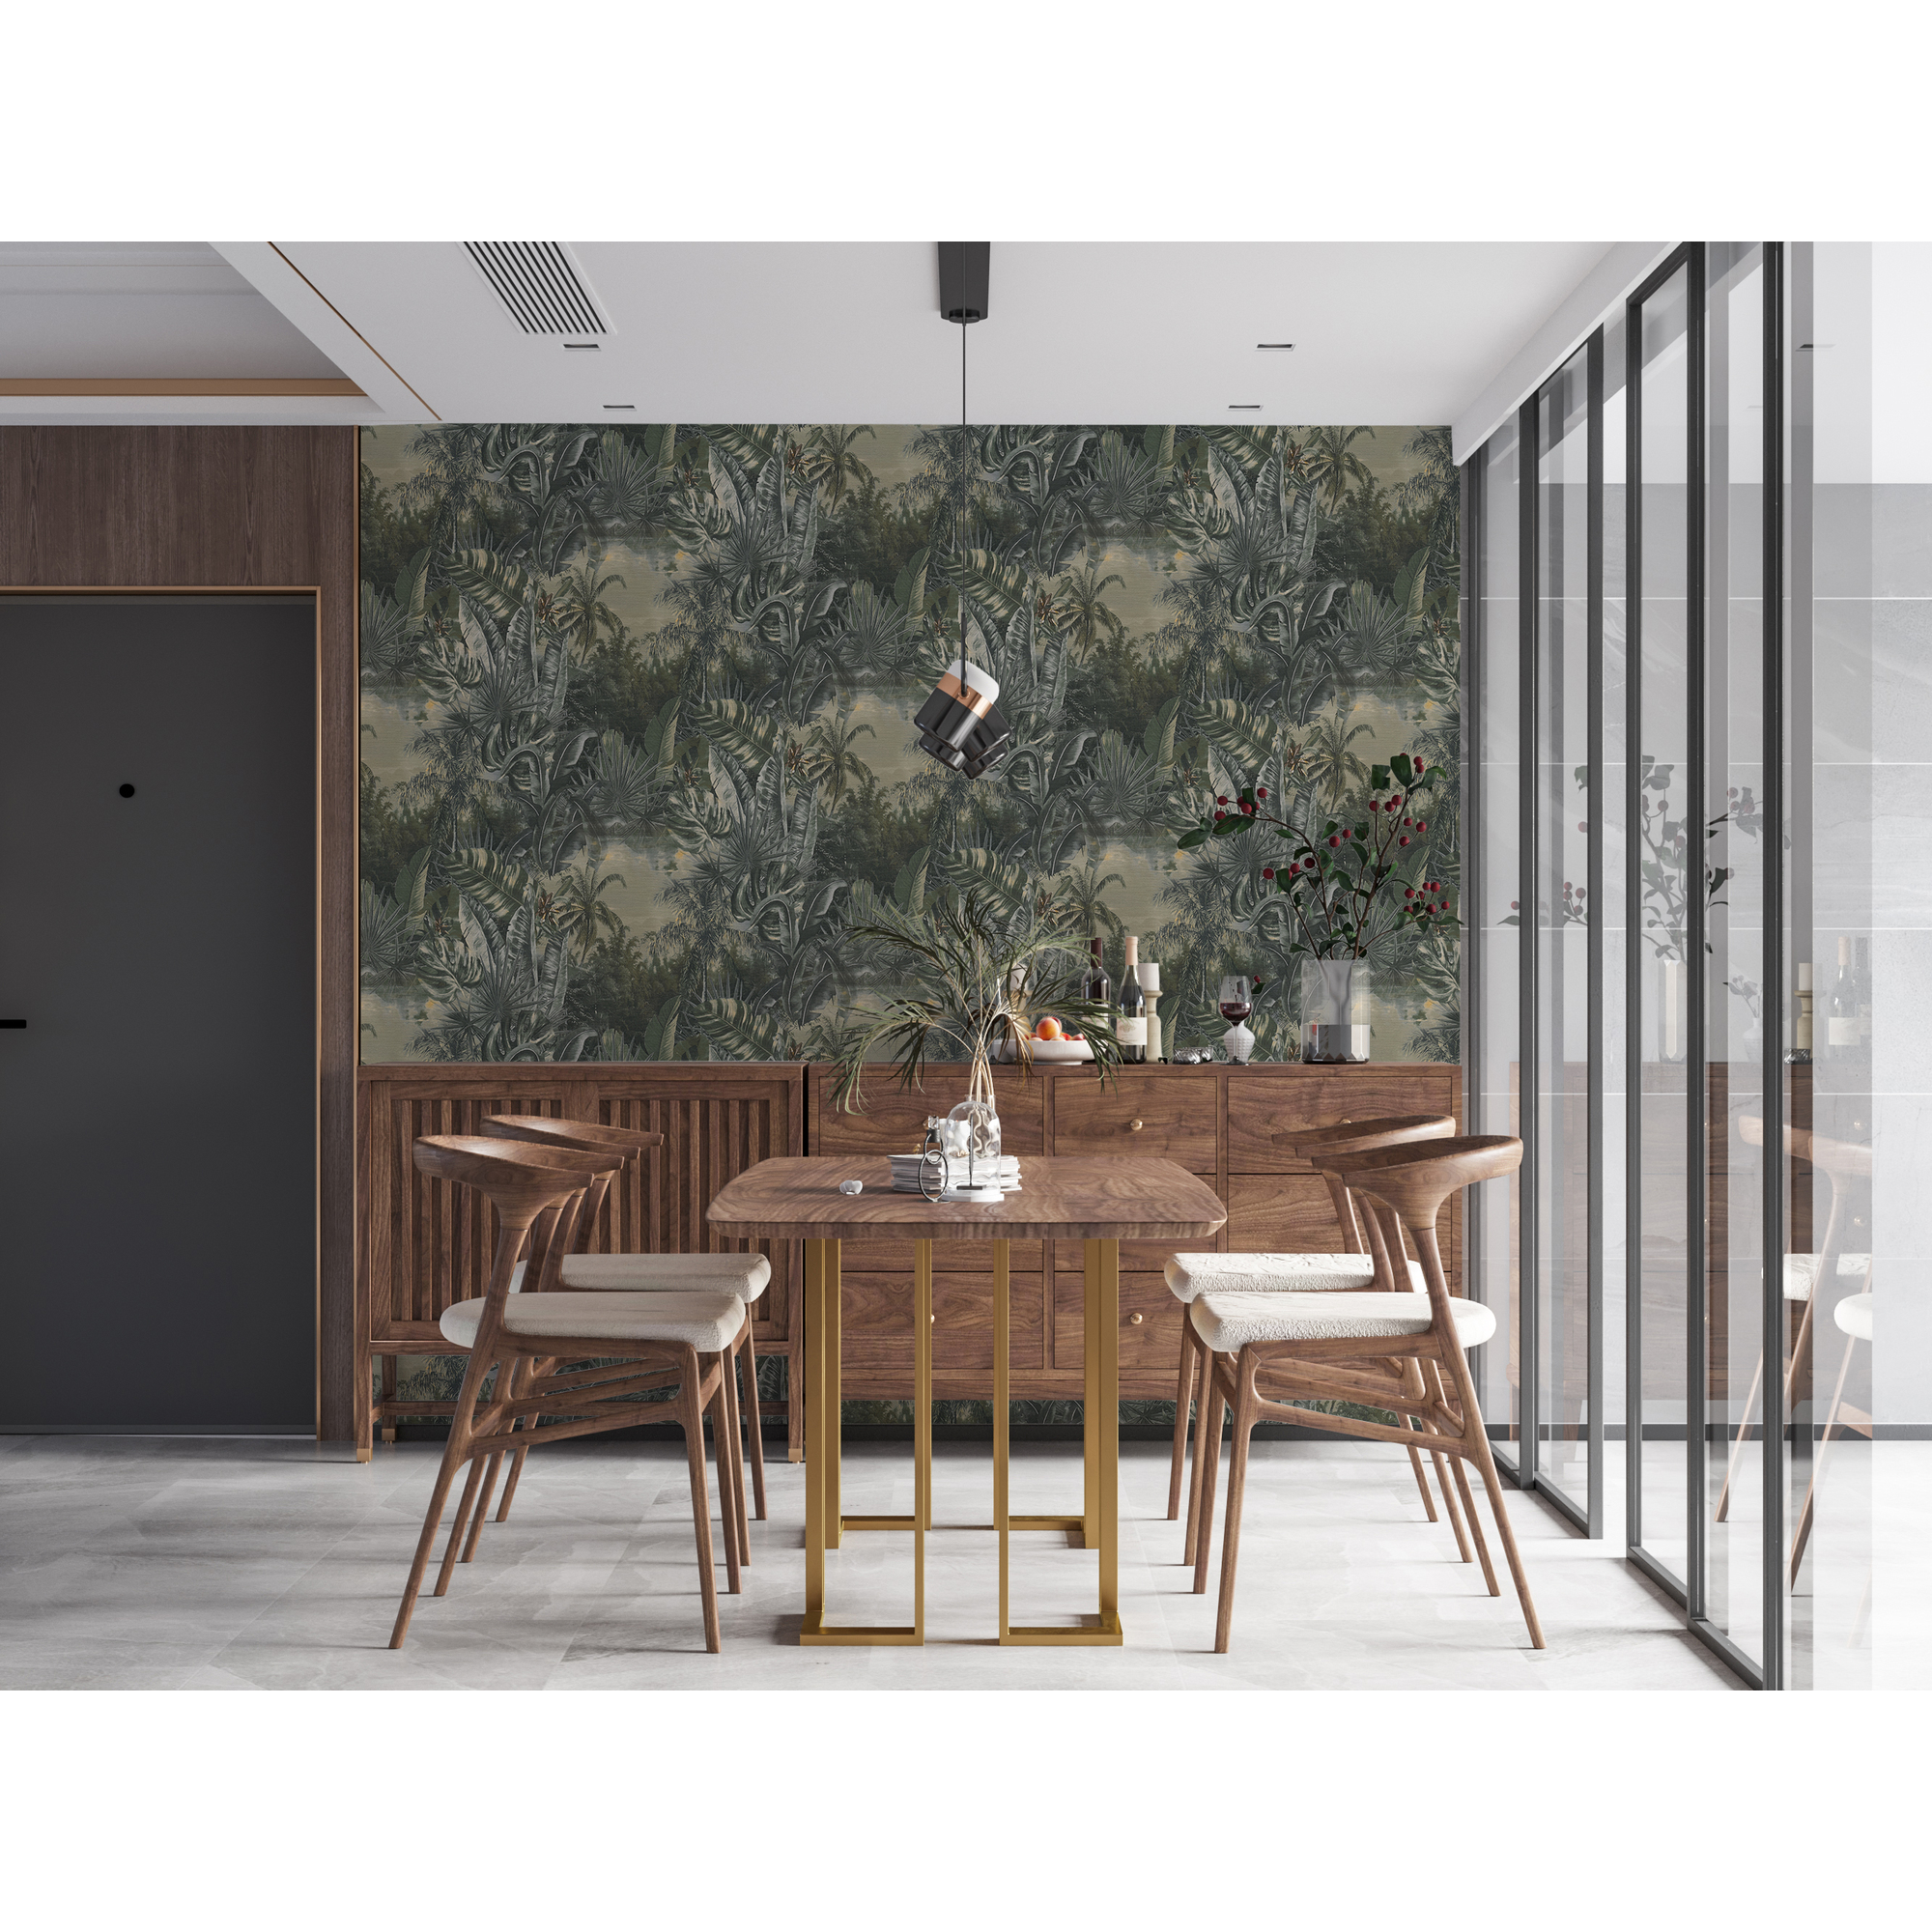 Vliestapete 'My Home. My Spa.' Dschungel grün 10,05 x 0,53 m + product picture